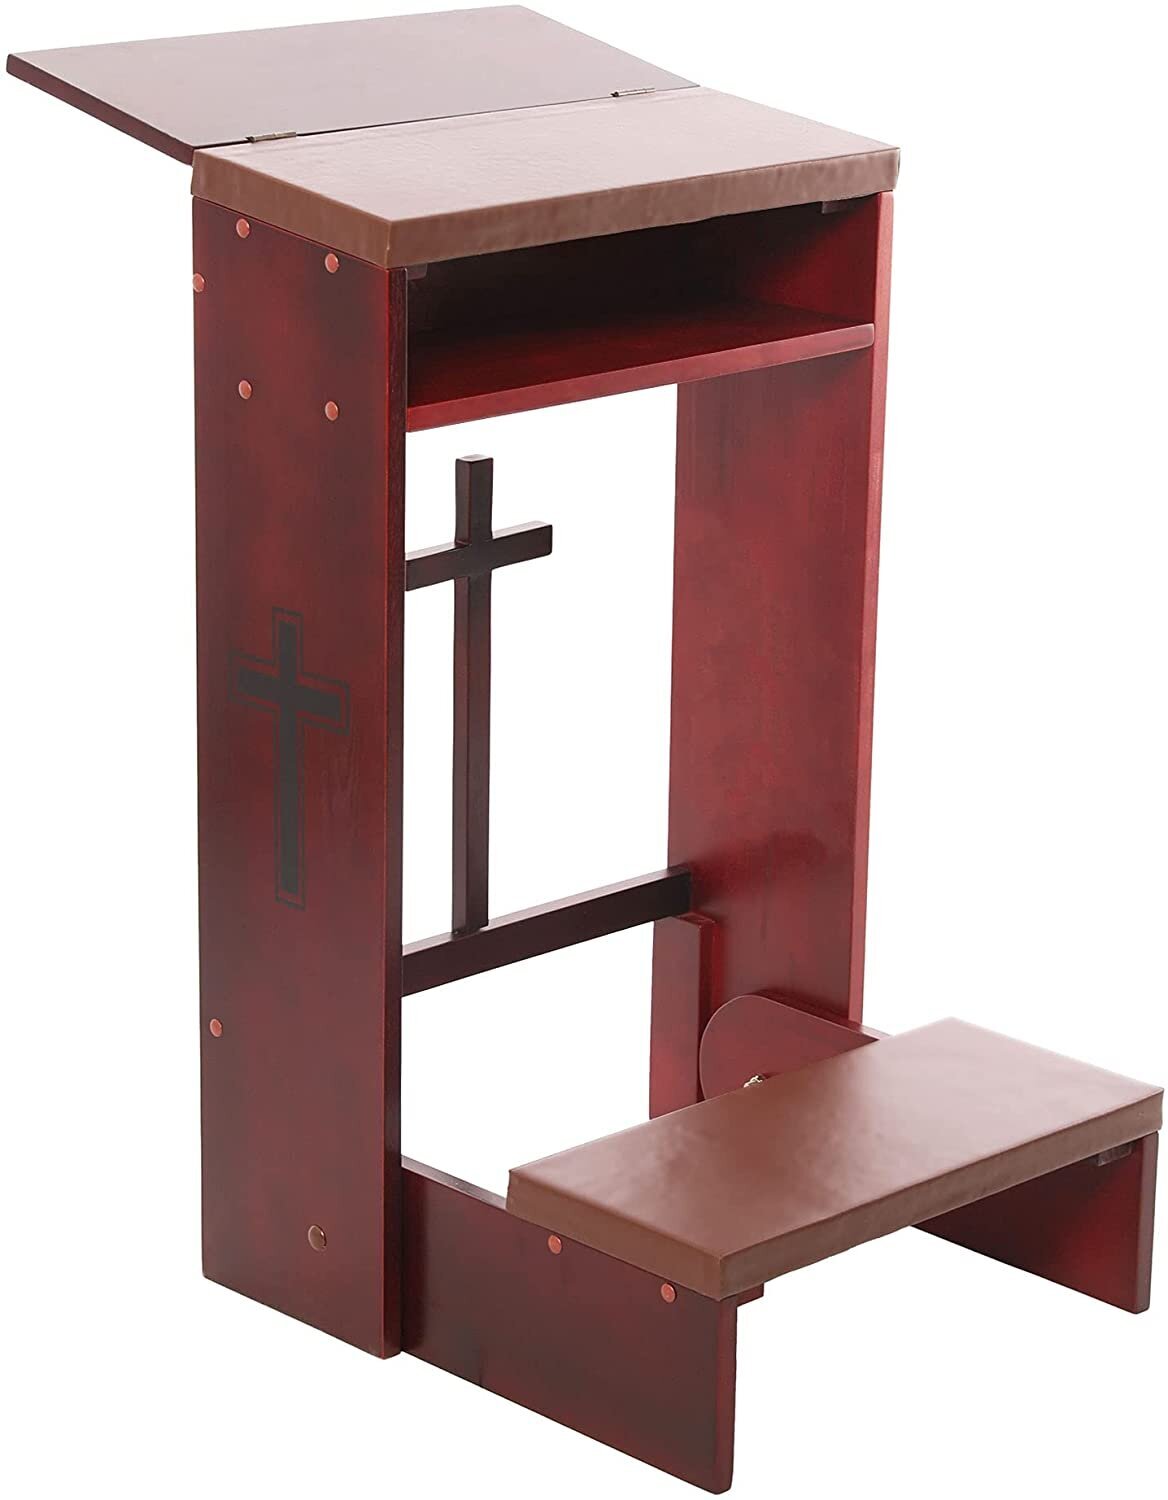 Trinx Prayer Bench Stool Table Chair